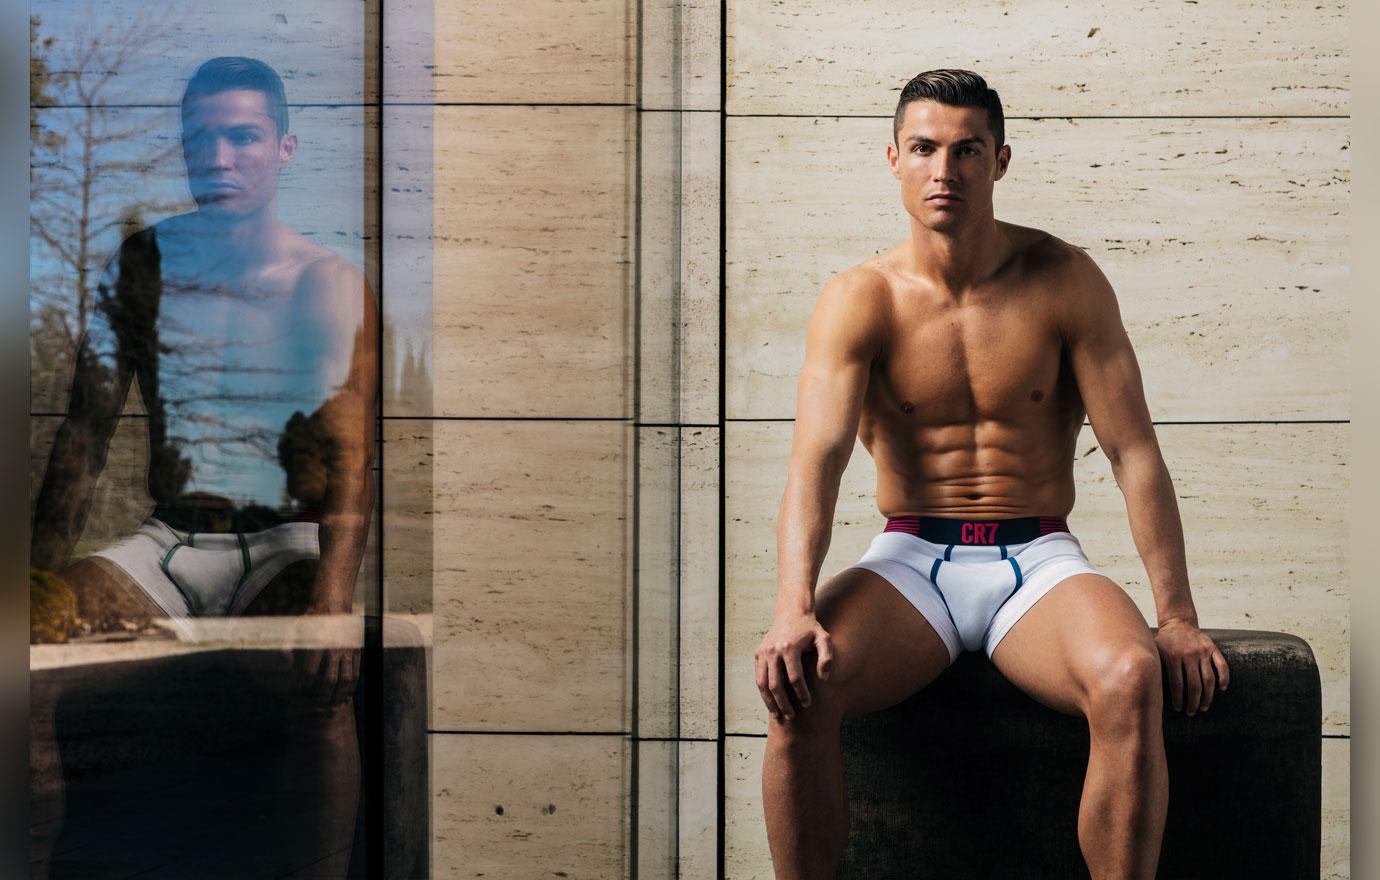 Cristiano Ronaldo Strips Down to His Underwear for Shirtless CR7 Campaign!:  Photo 4145253, Cristiano Ronaldo, Shirtless Photos